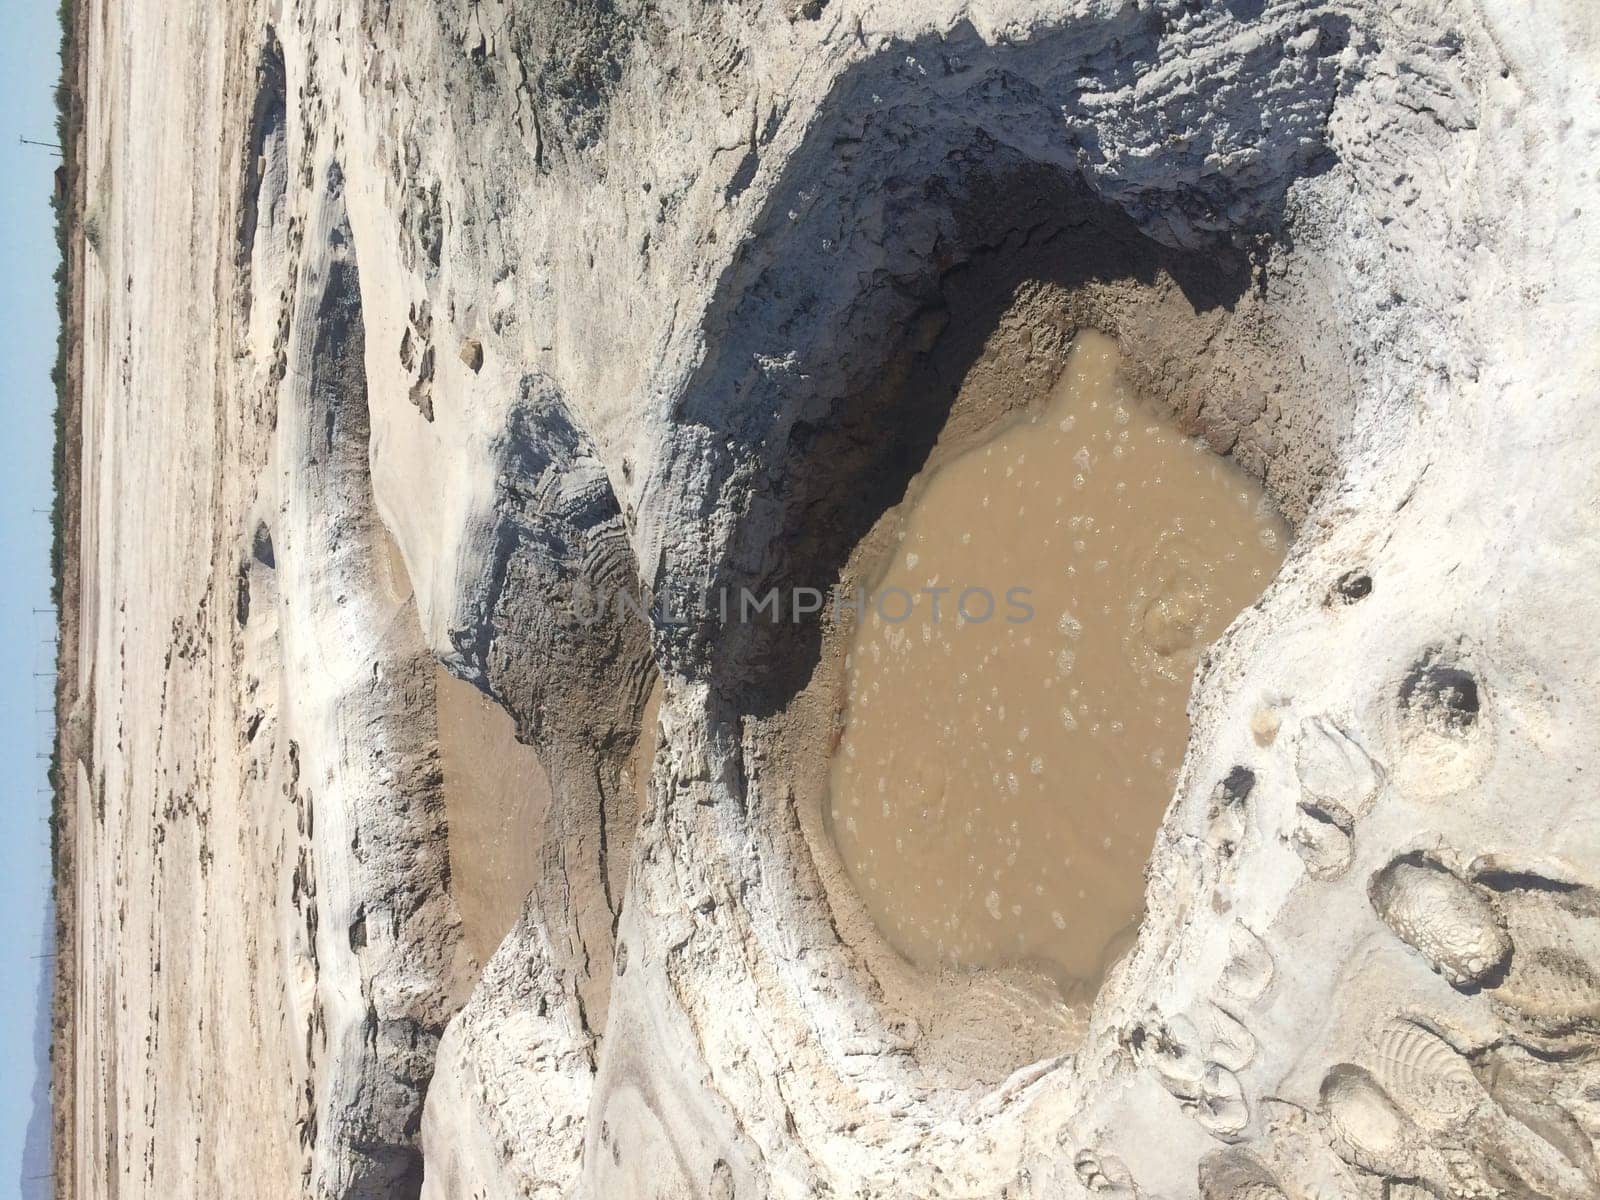 Salton Sea Mud Pots, Geothermal Activity in Southern California, near Calipatra. High quality photo